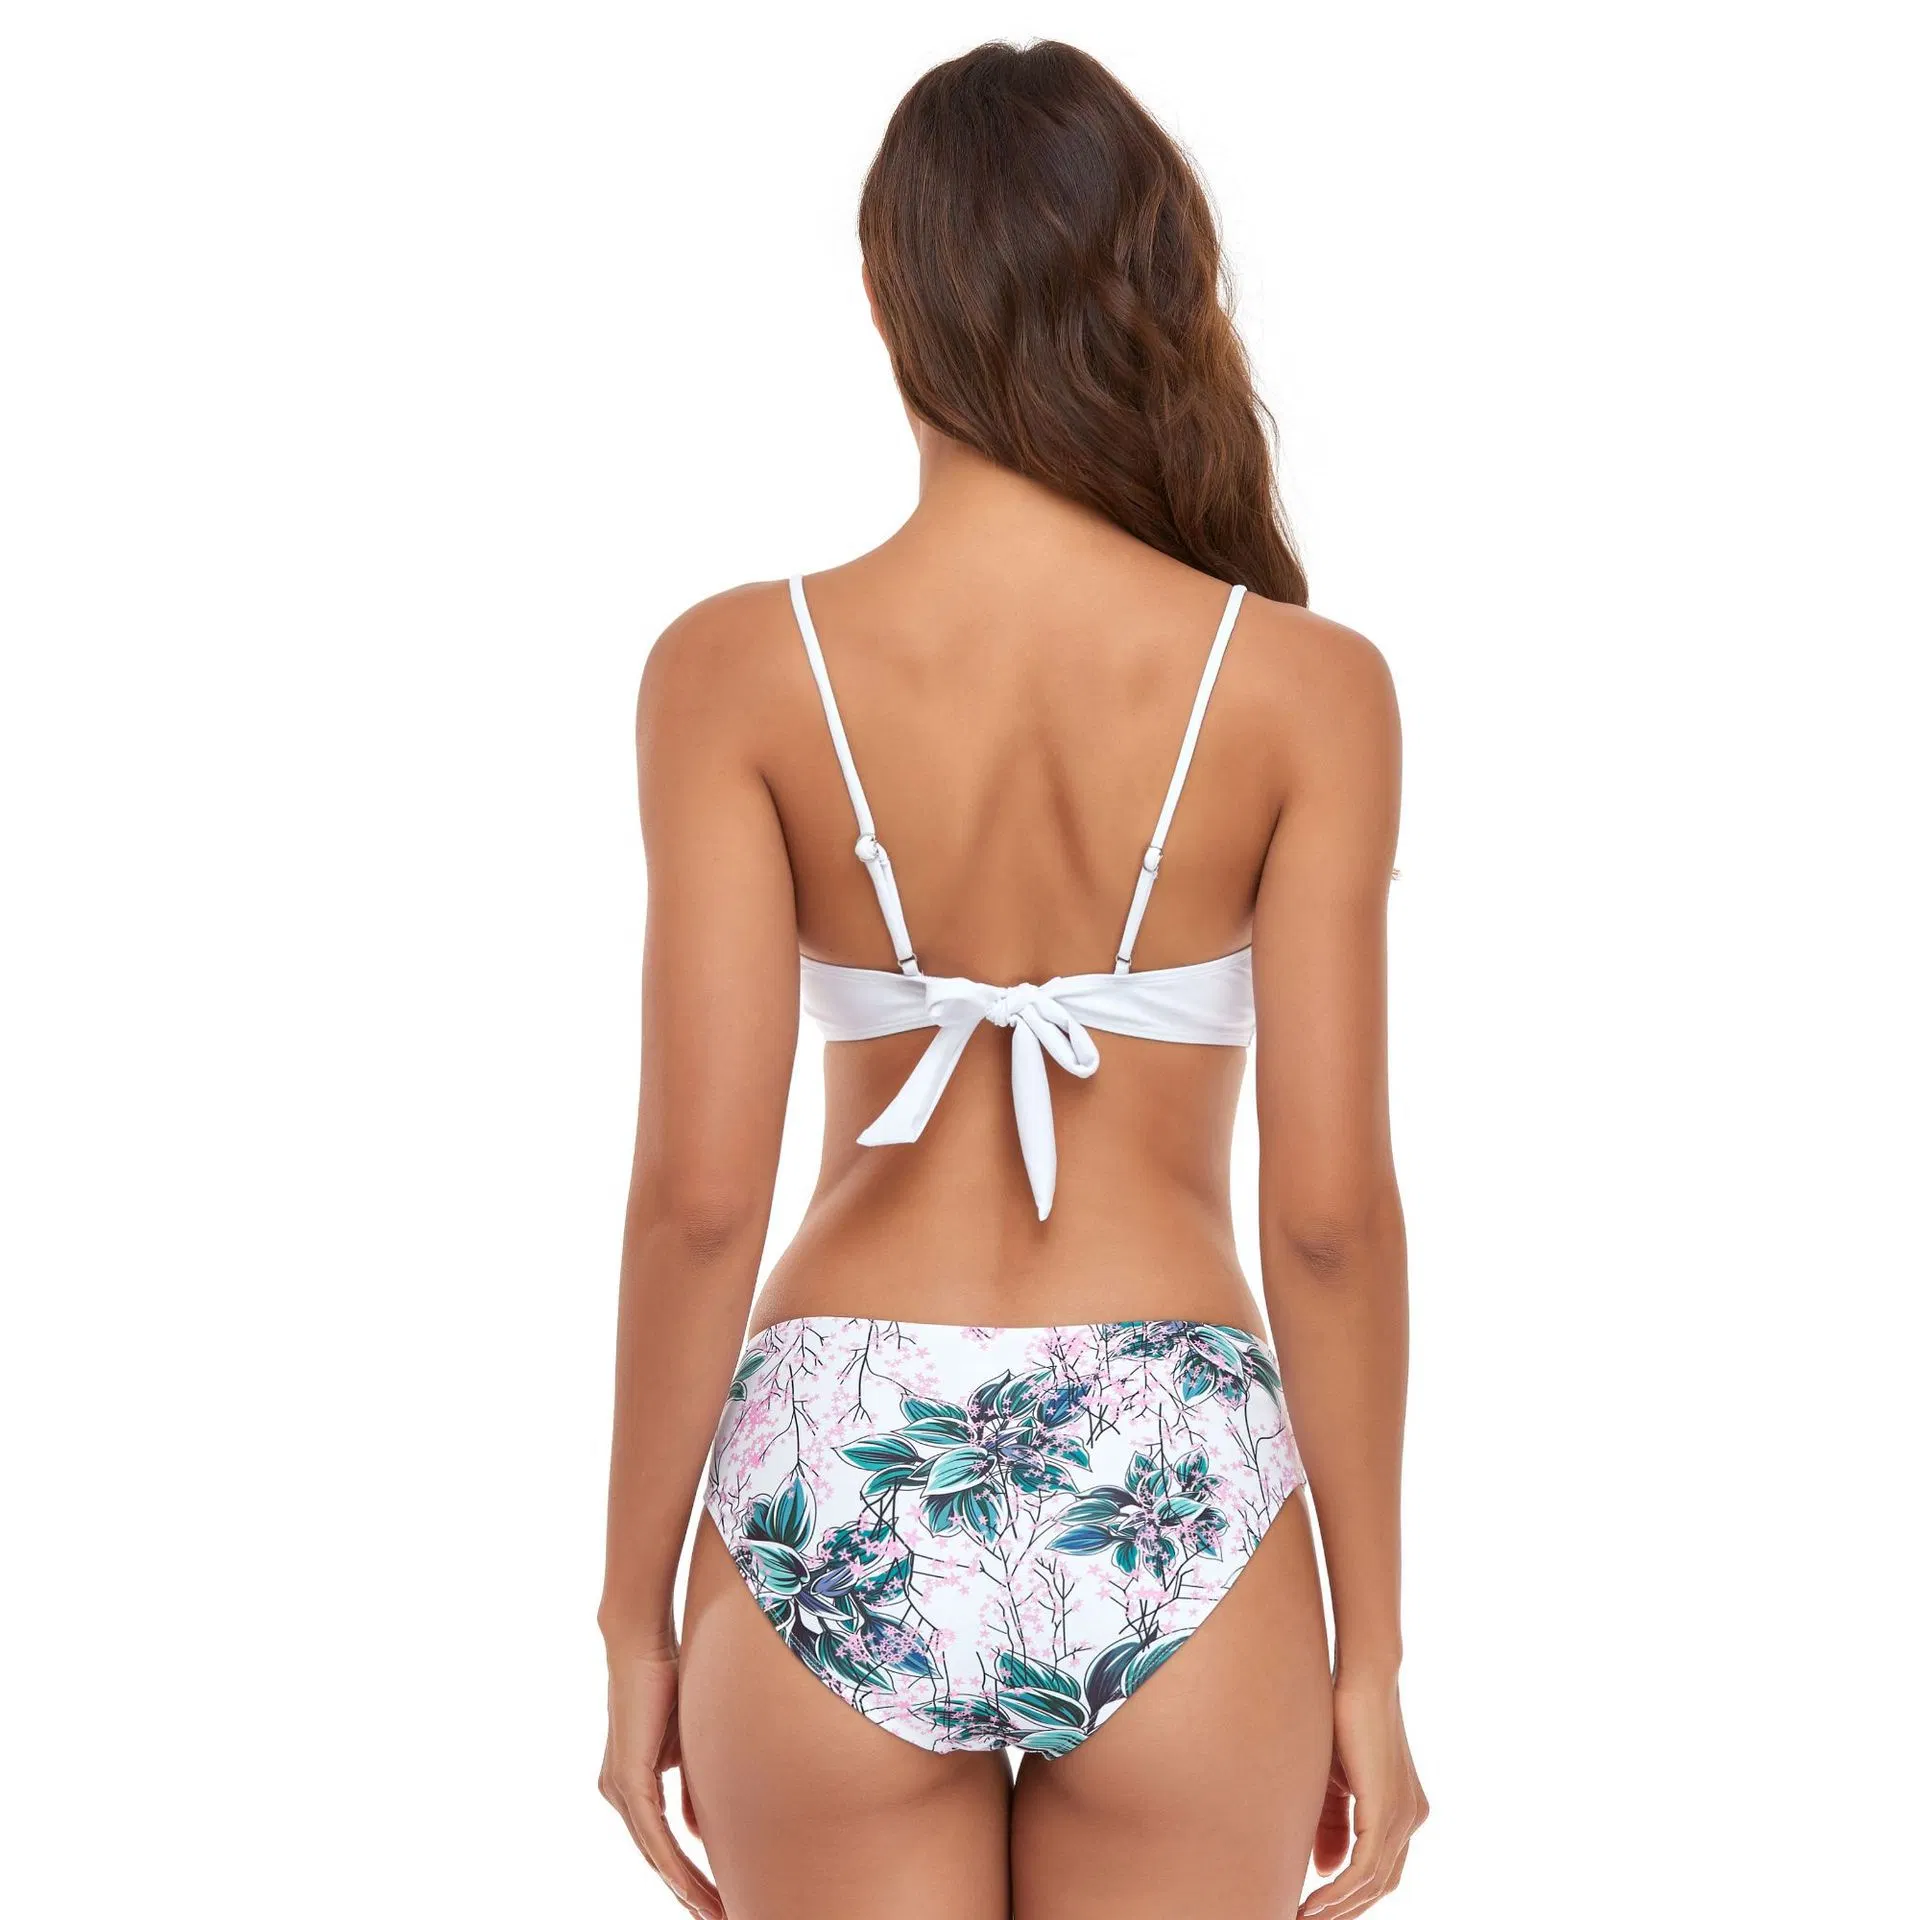 New Arrival Hot Selling Woman Bikini Swimwear 3 Piece Woman Swim Beachwear 3 Swimsuit with Cover up Dress